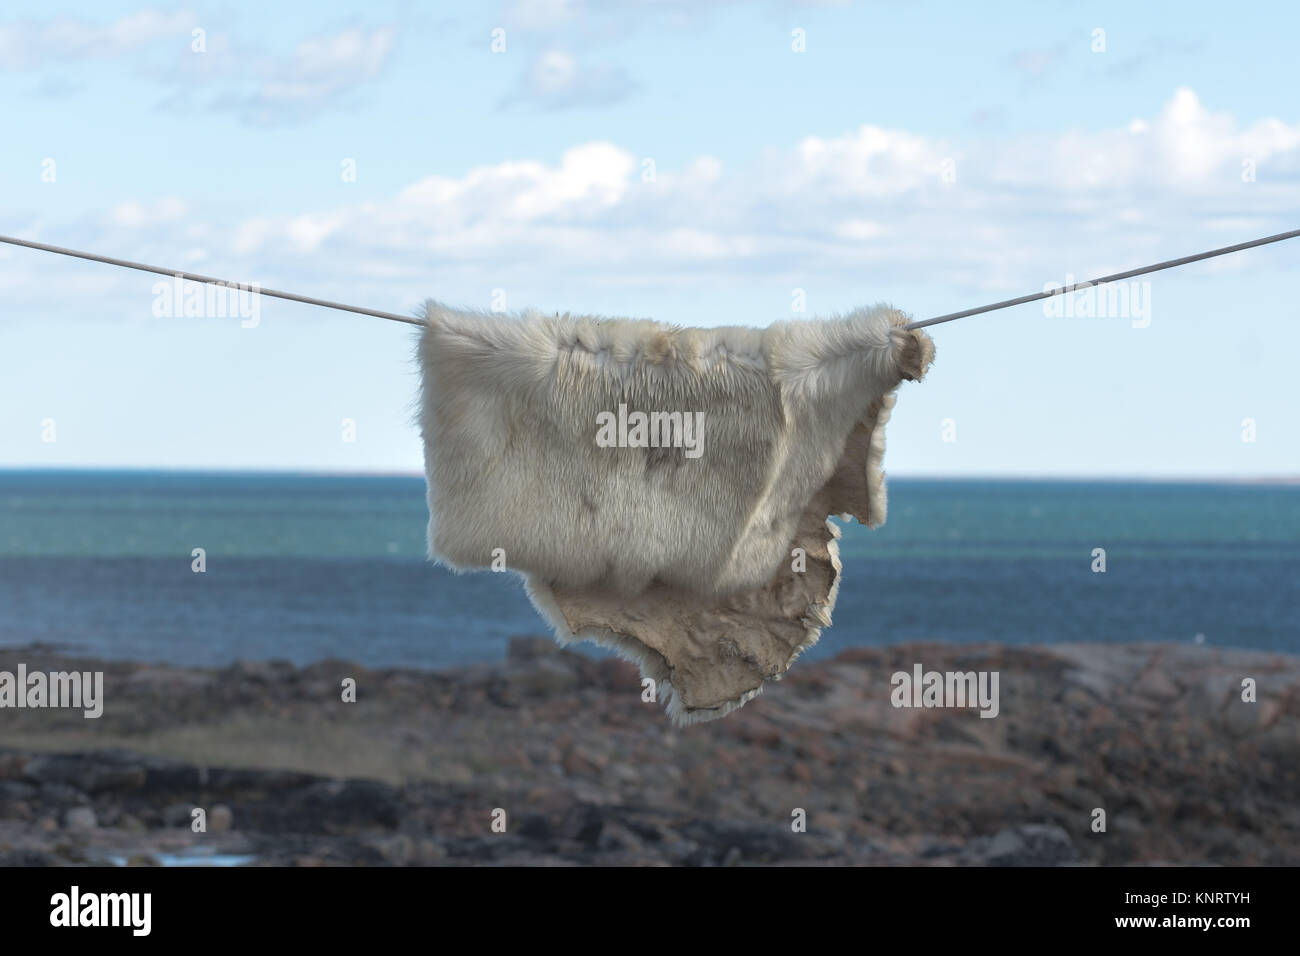 Polar bear skin hanging on clothesline ourdoors Stock Photo